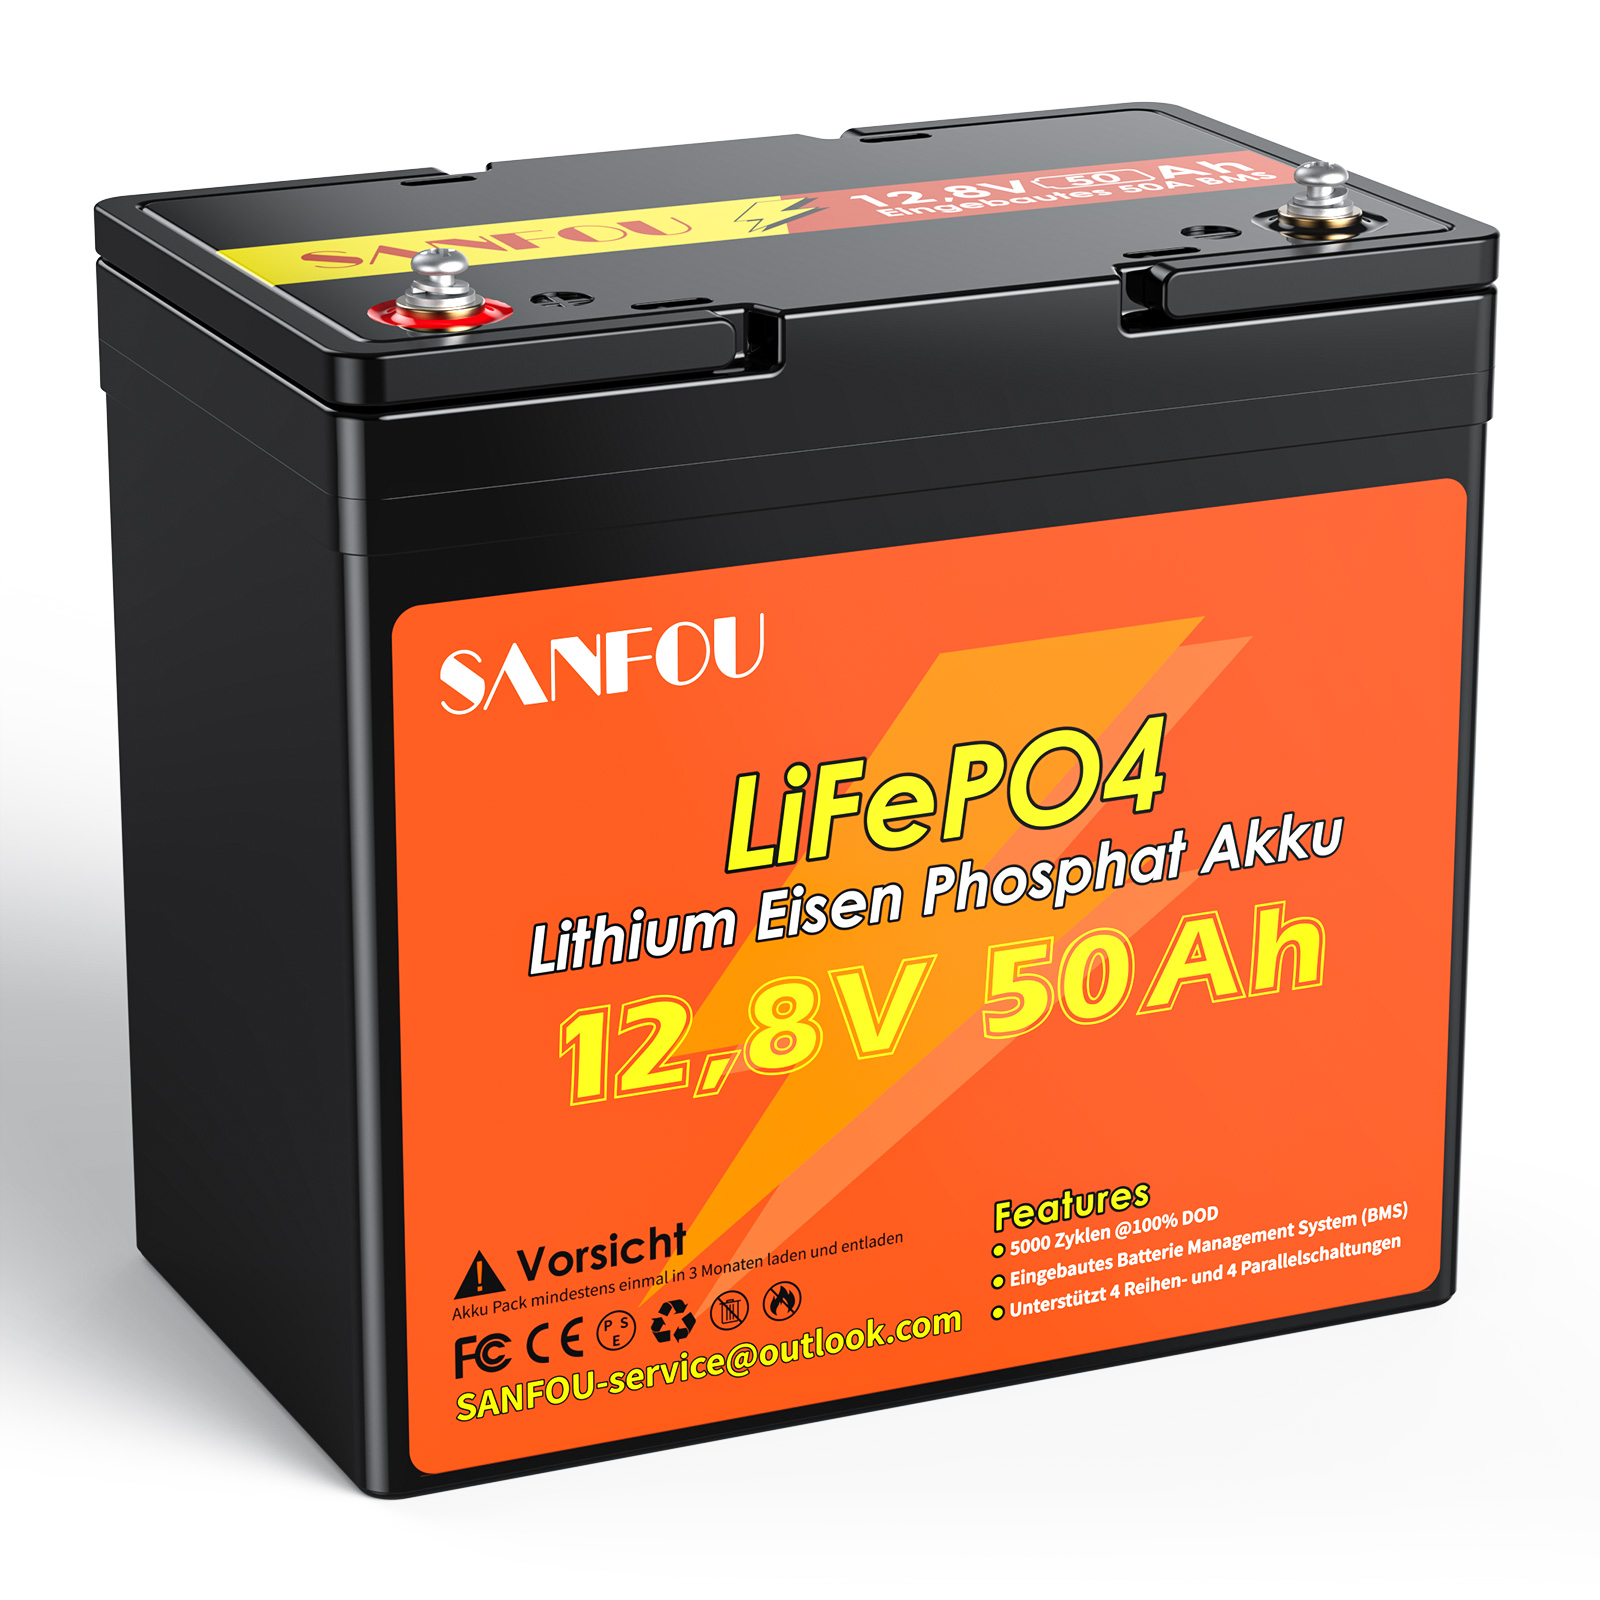 LiFePO4 Akku 12V 50Ah mit BMS (Batterie Management System